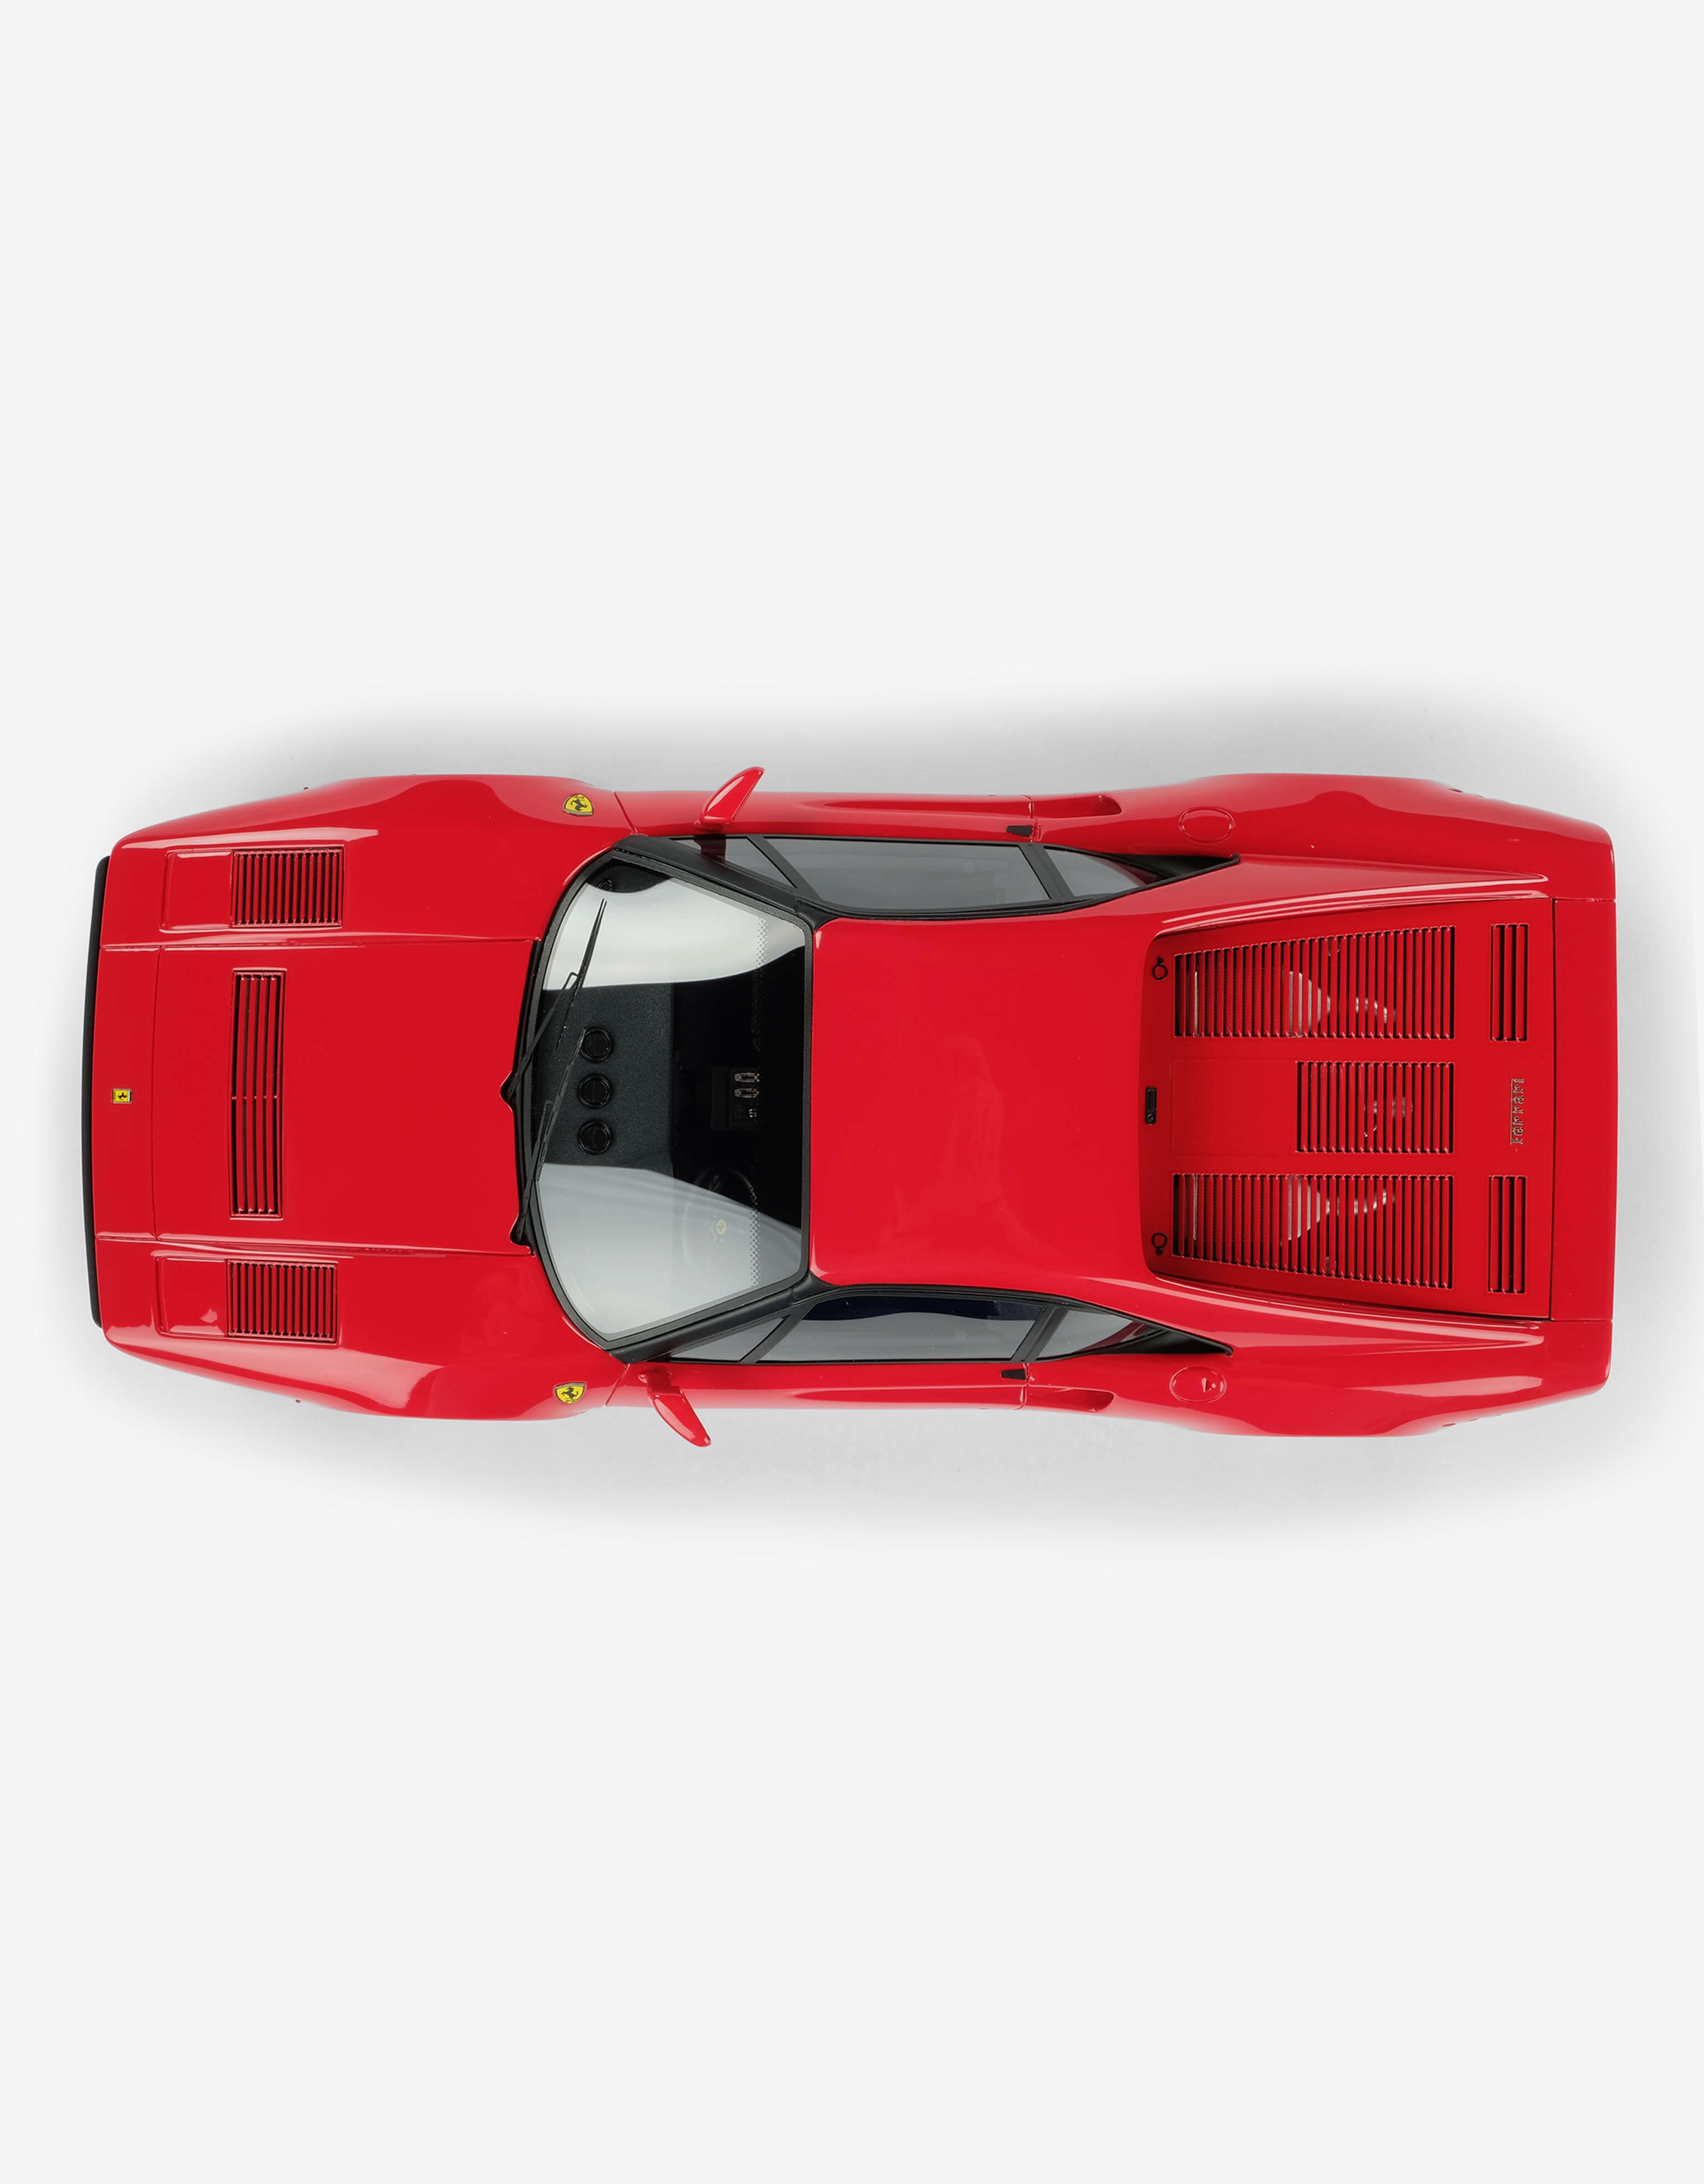 Ferrari Ferrari 288 GTO Le Mans model in 1:18 scale Red L7812f